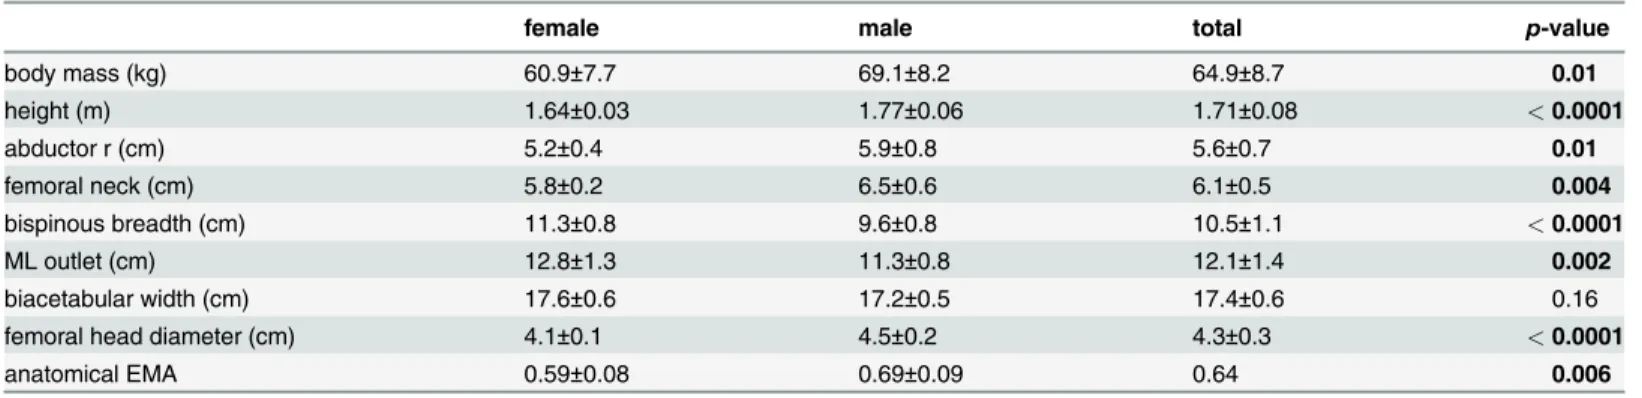 Table 1. Summary statistics for anthropometric measurements.